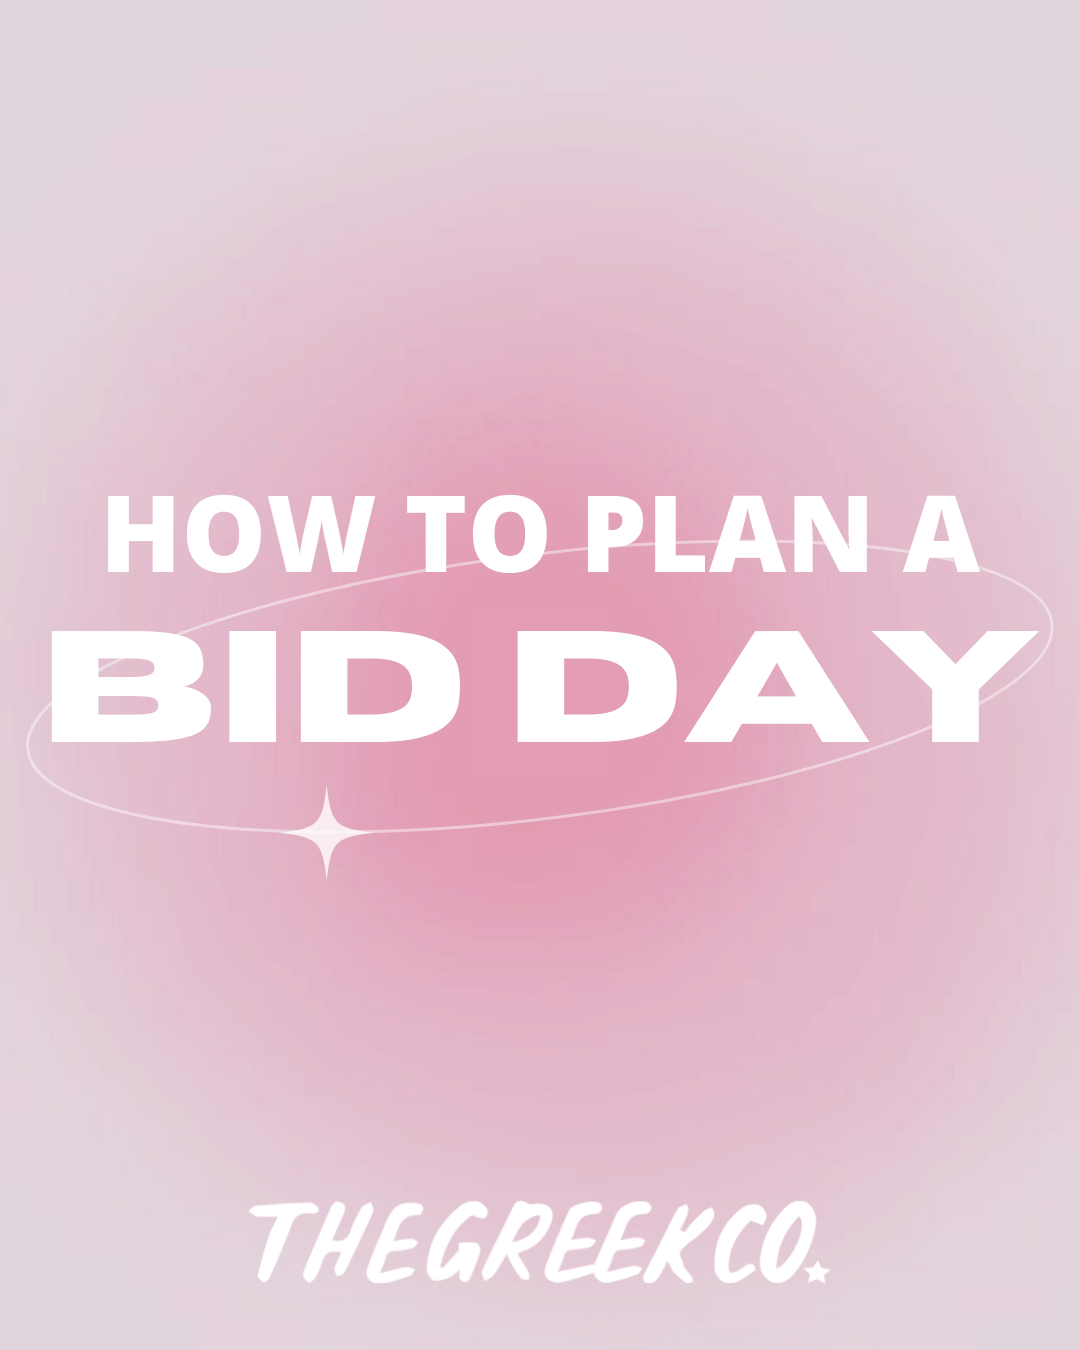 How to Plan a Sorority Bid Day - The Greek Co. Blog Post